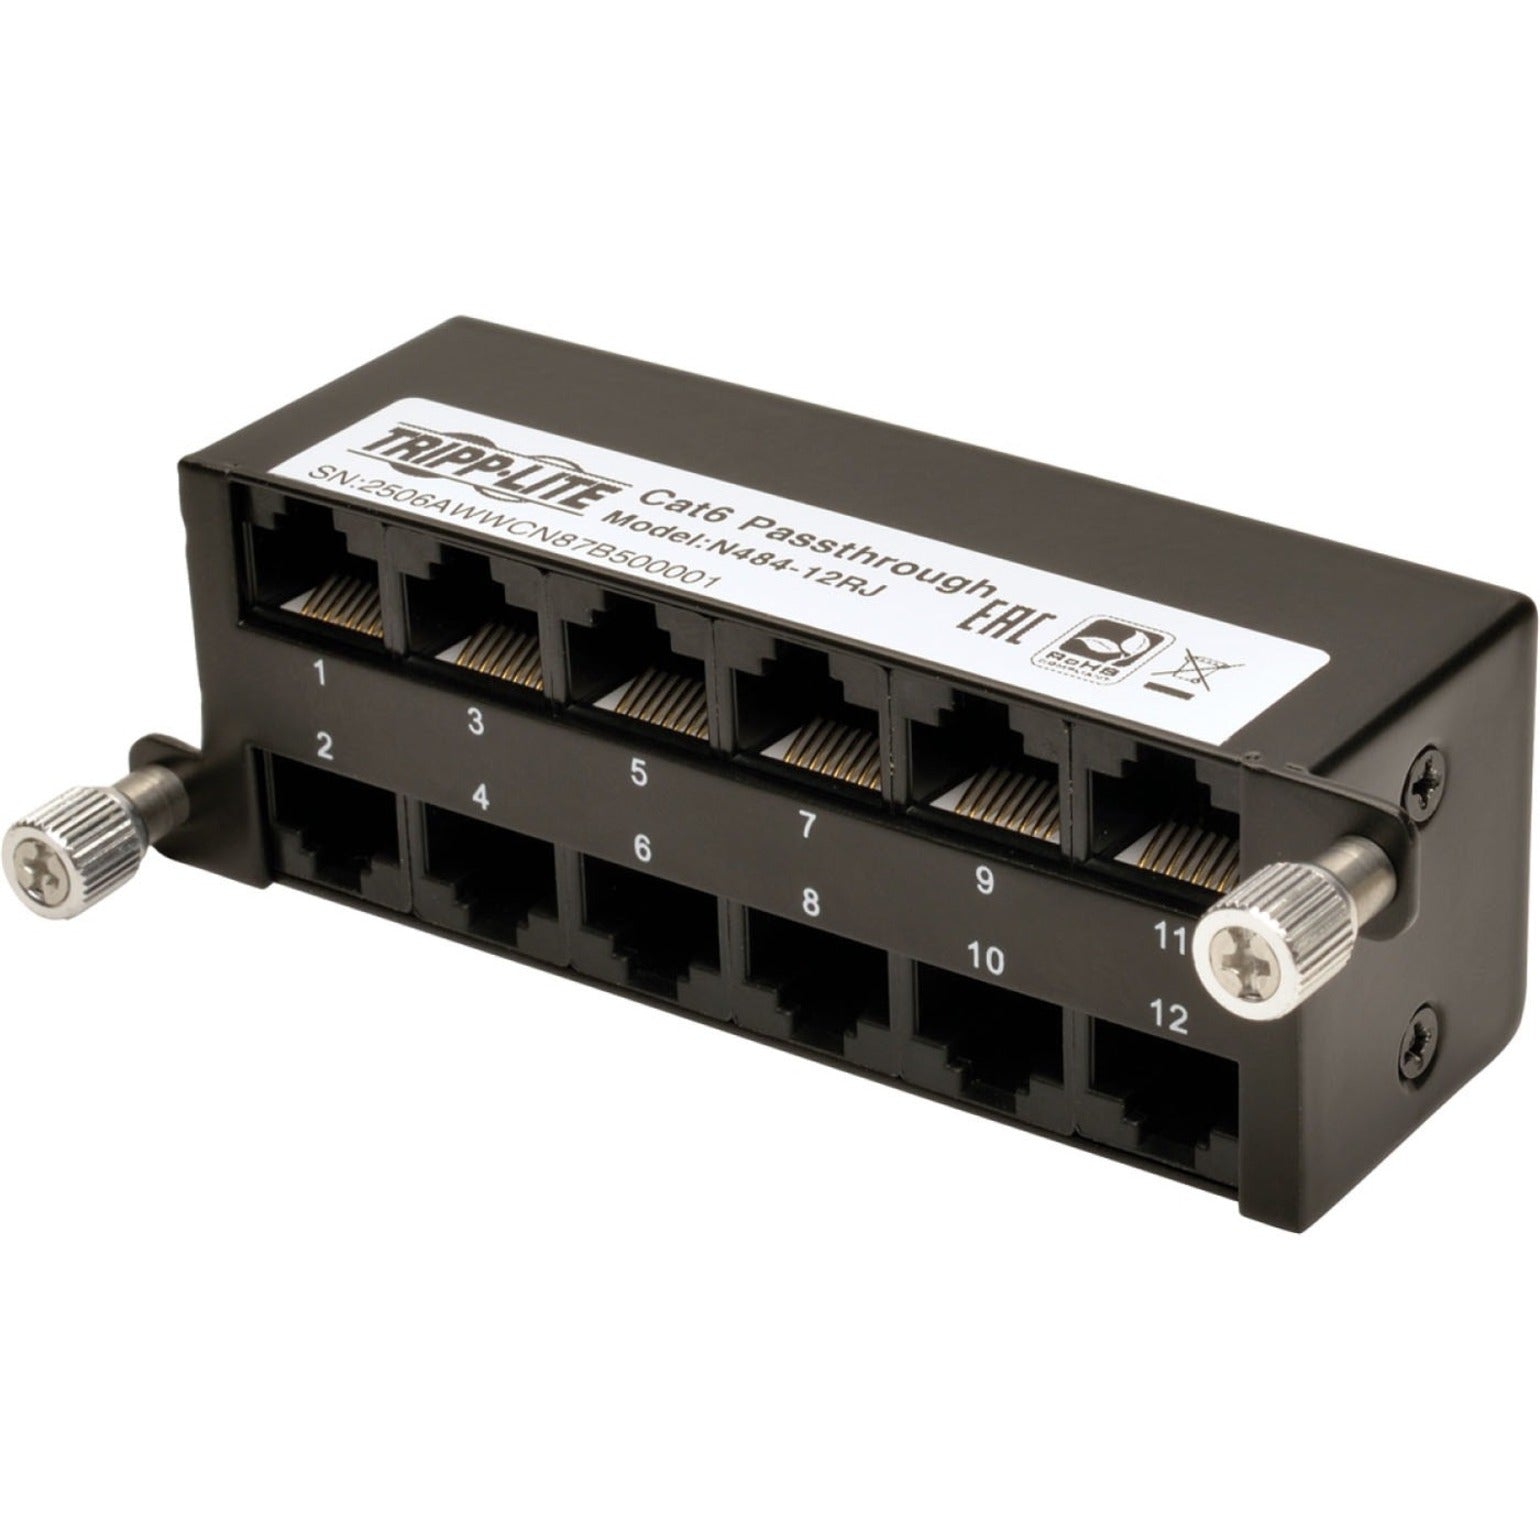 Tripp Lite N484-12RJ Cat6a Pass-Through Cassette - (x12) RJ45, Network Patch Panel